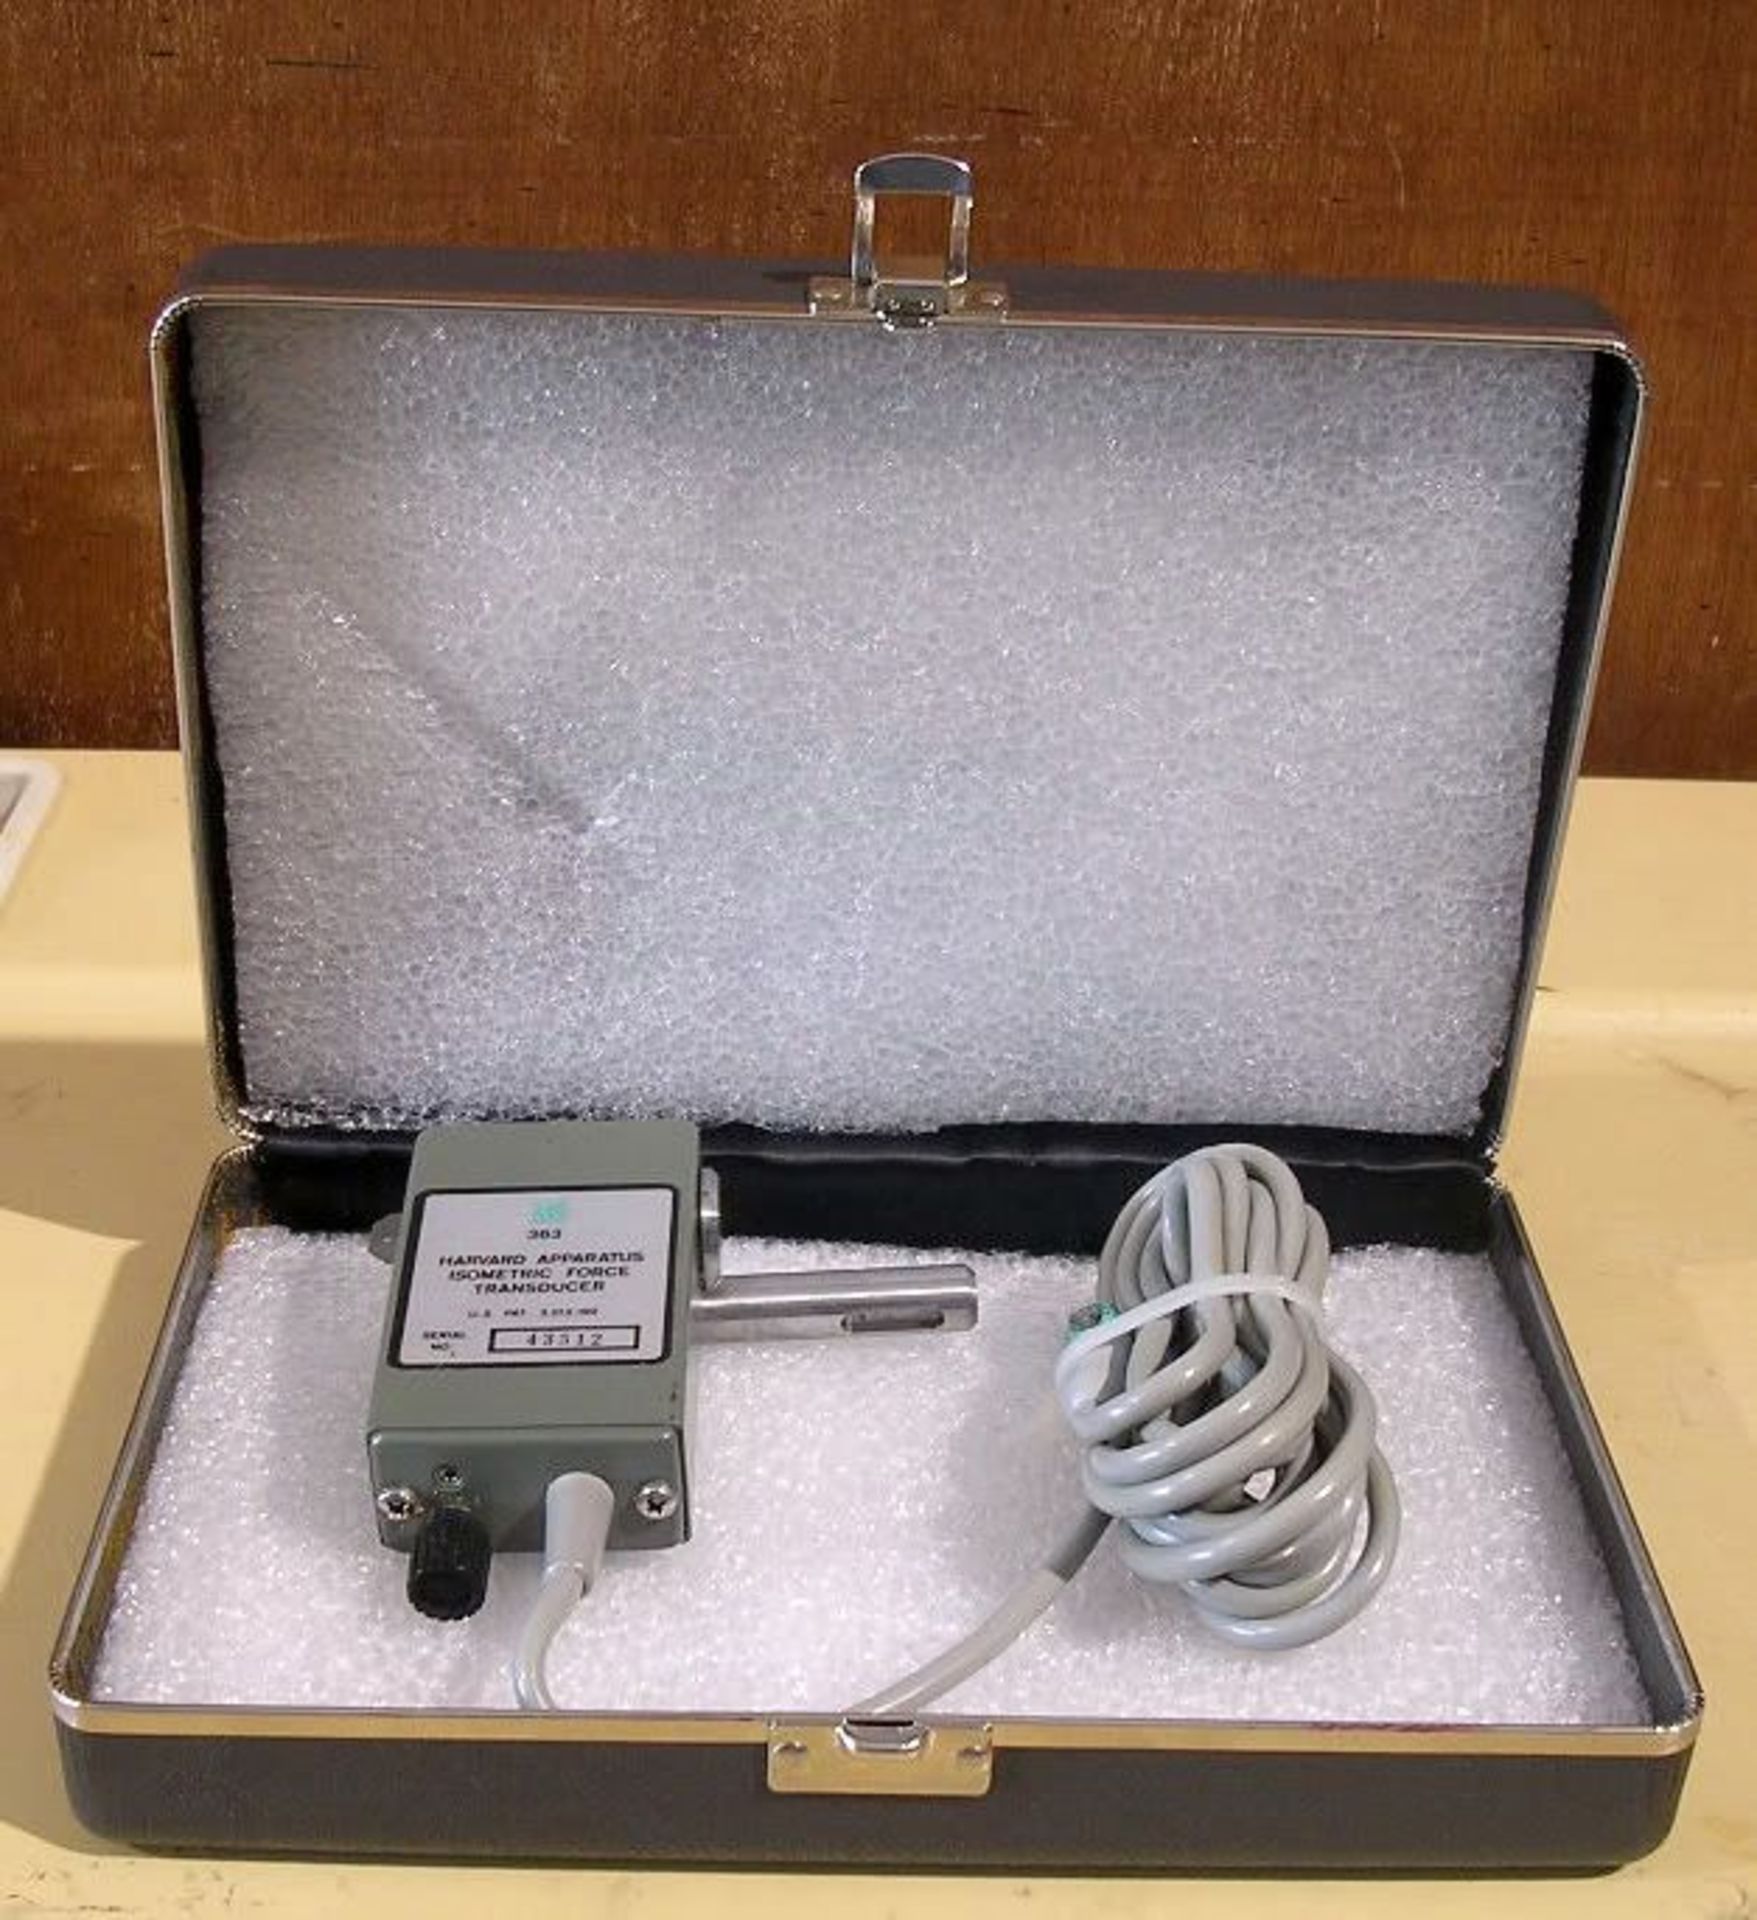 HARVARD APPARATUS Isometric Force Transducer, Model 363, Qty 1, 321468690838